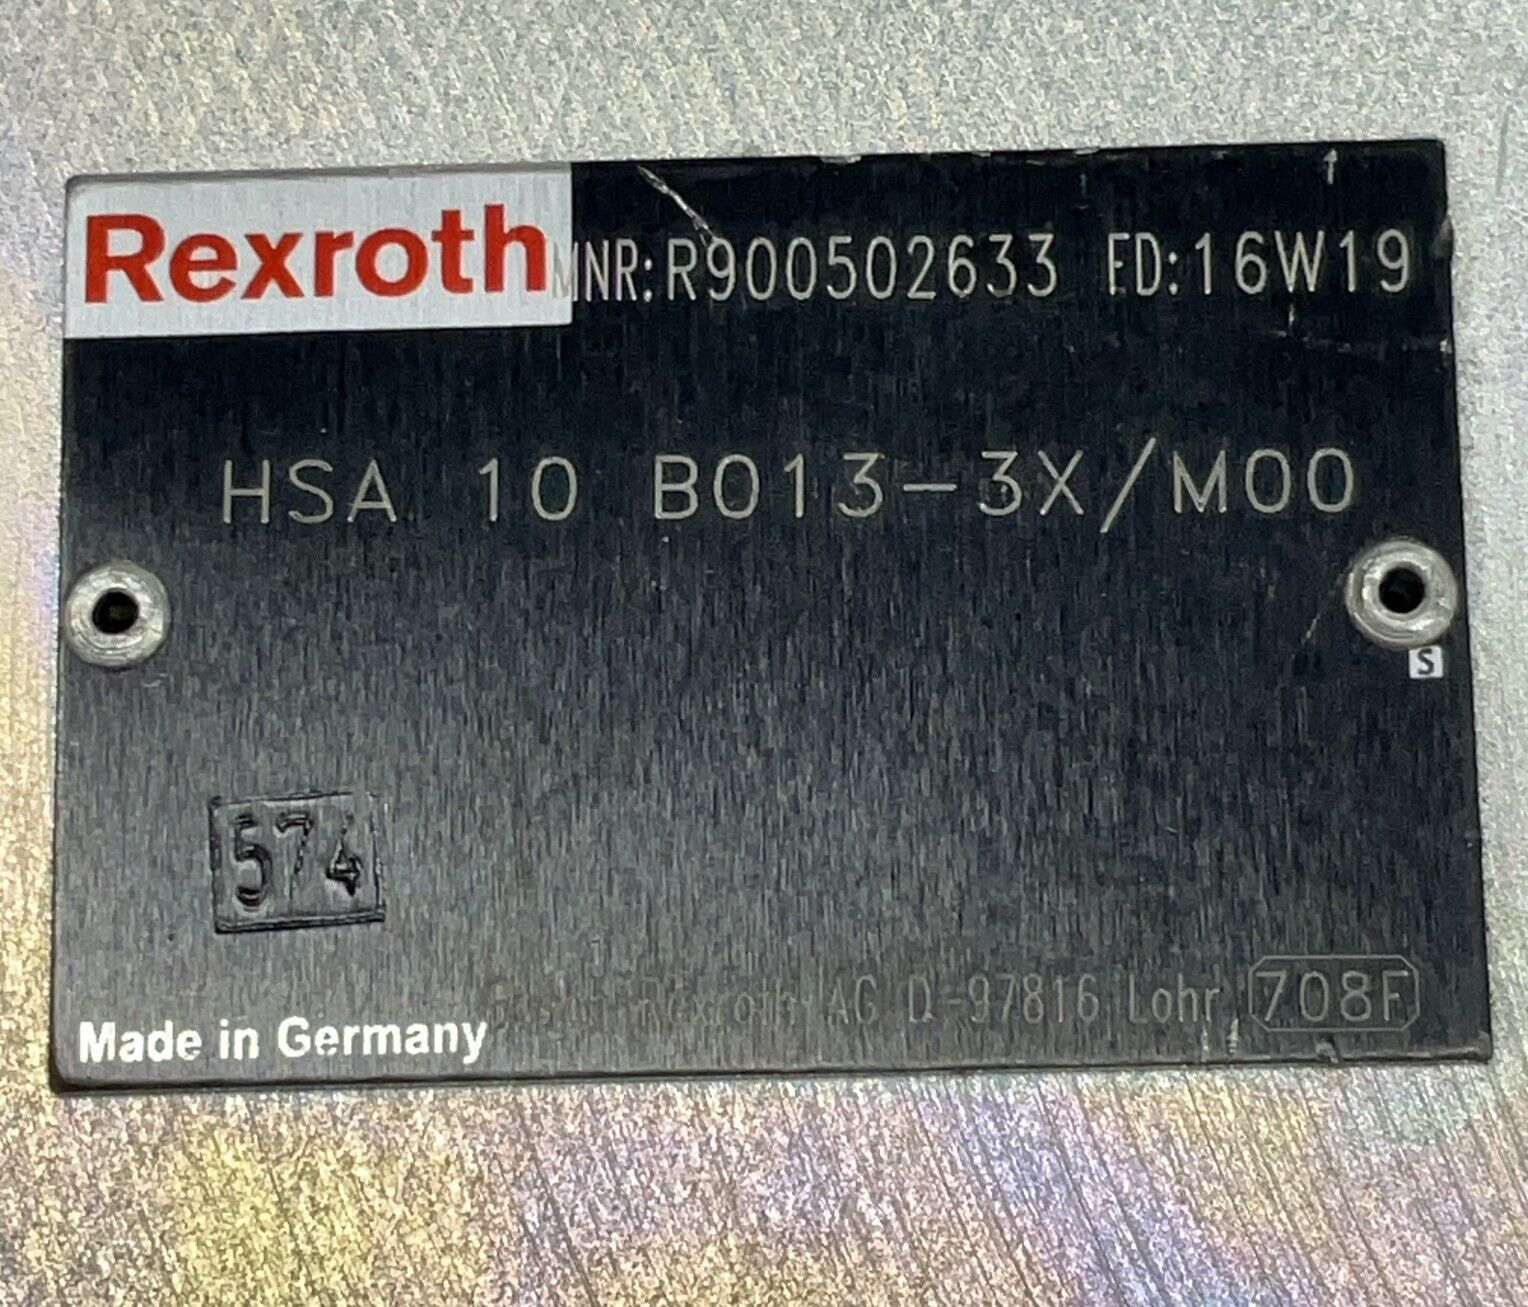 Rexroth Bosch  HSA10B013-3X/M00 R900502633 Cover Plate (CL365)